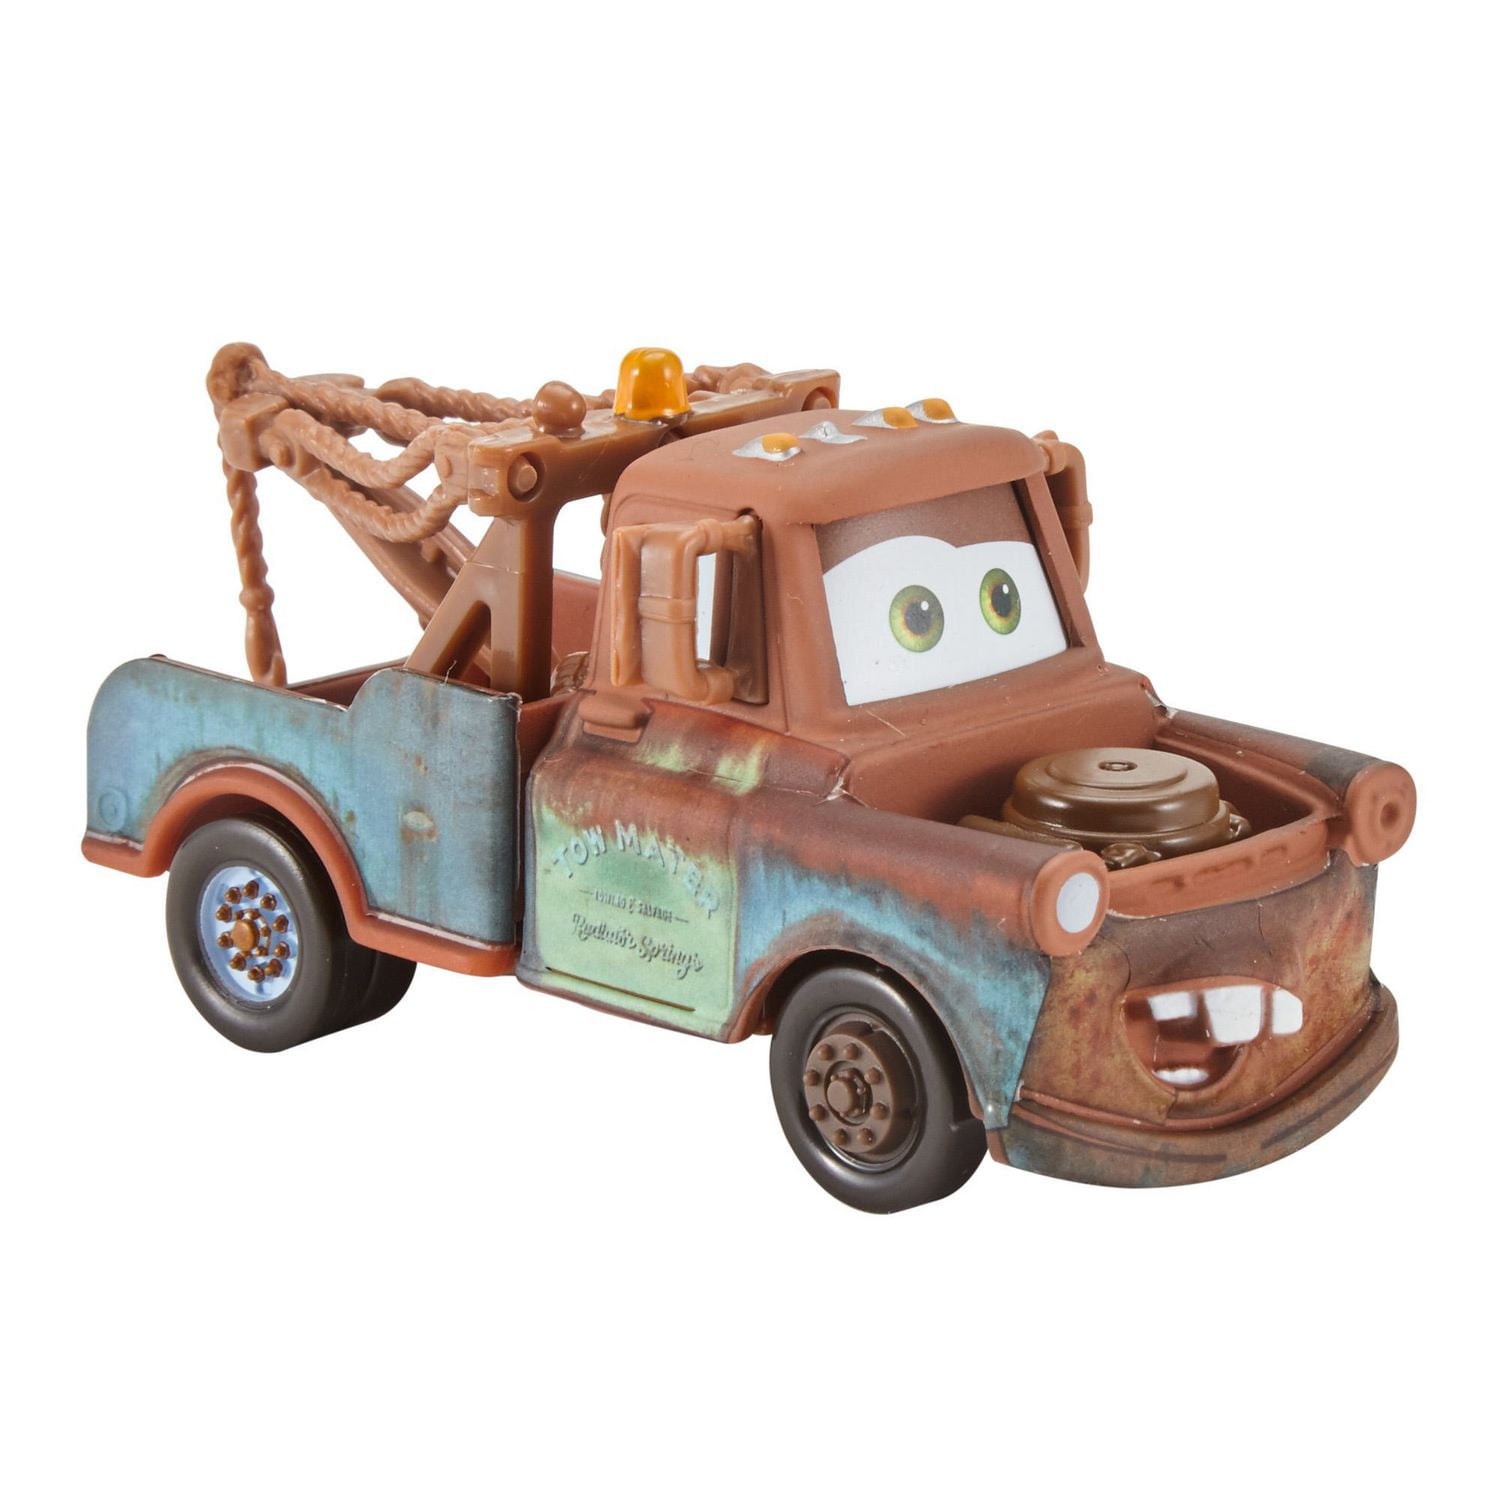 Disney/Pixar Cars 3 Mater Vehicle